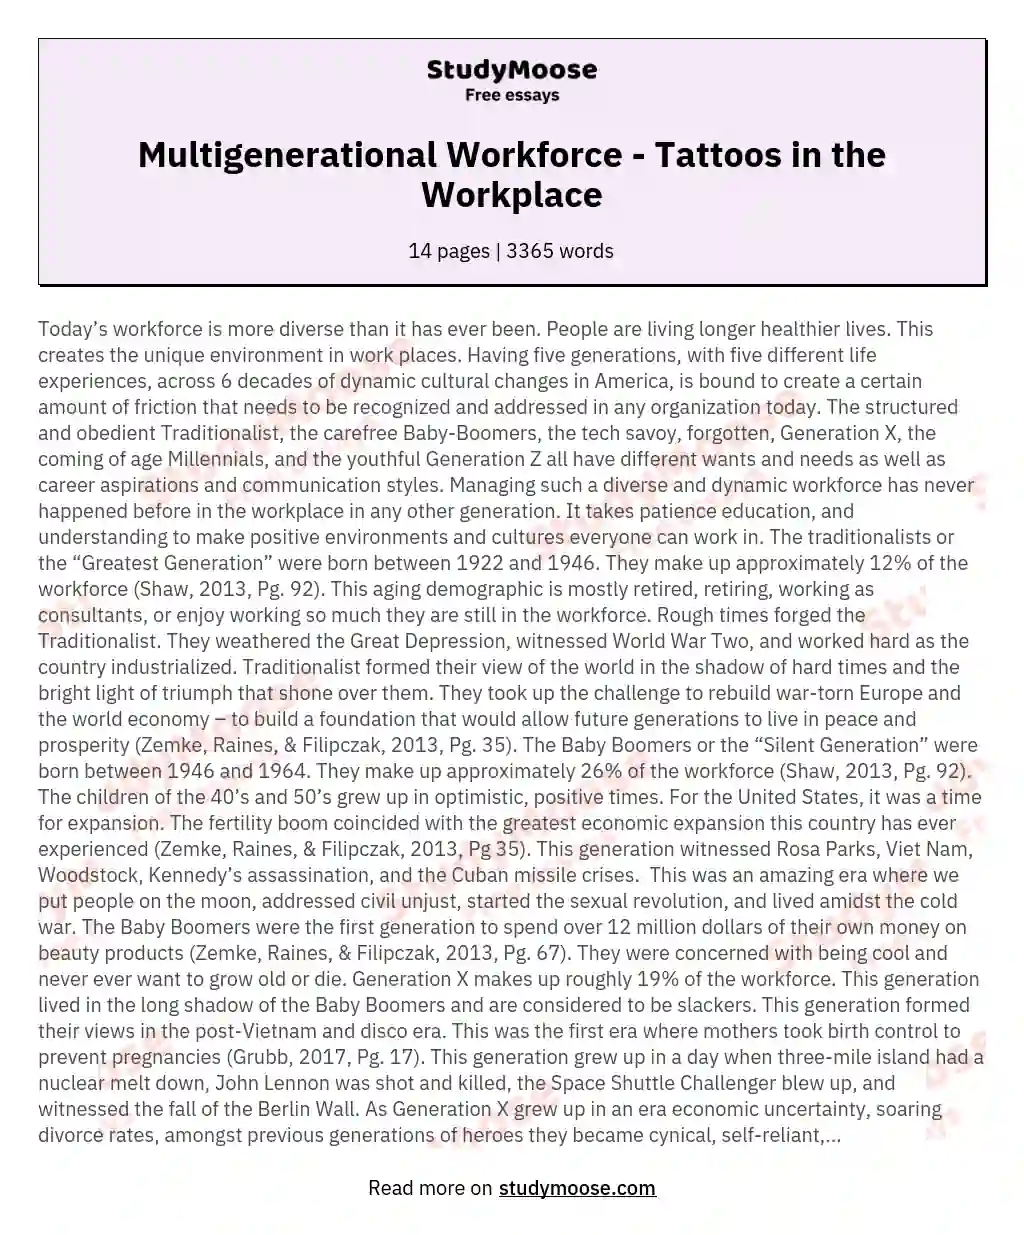 Multigenerational Workforce - Tattoos in the Workplace essay